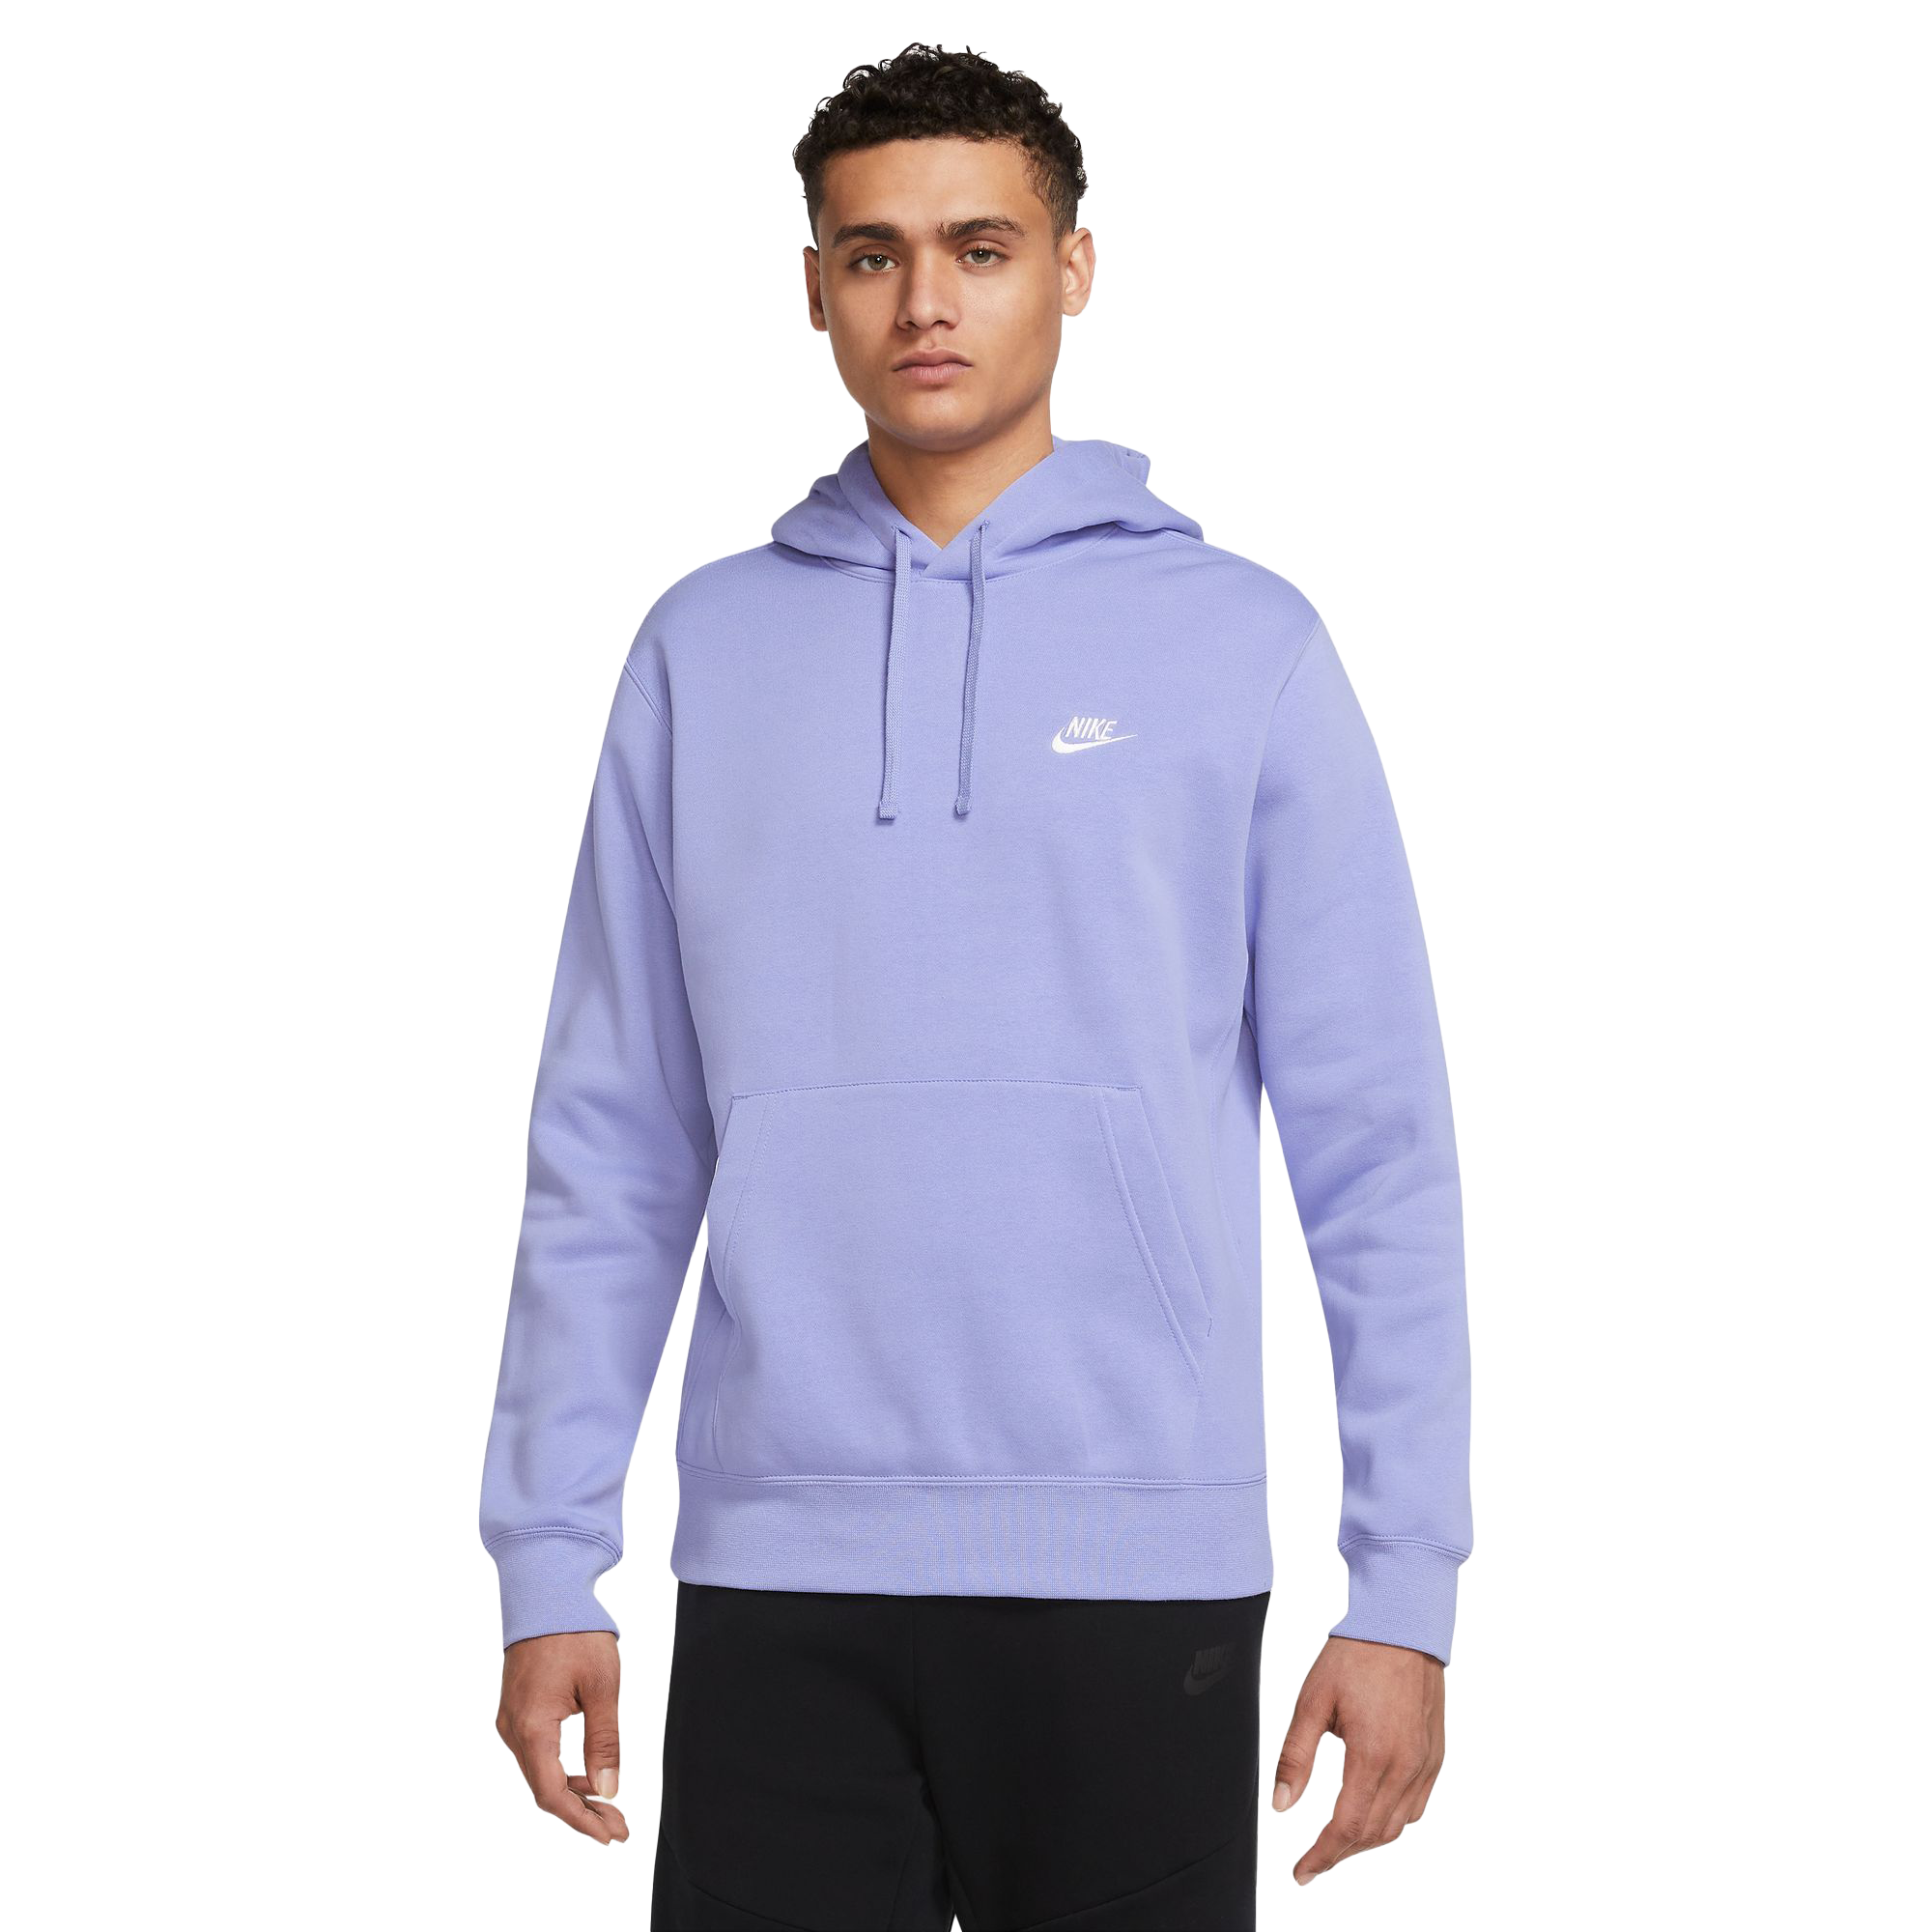 Nike Men's Pull-Over Hoodie (Team Purple/White, Large)